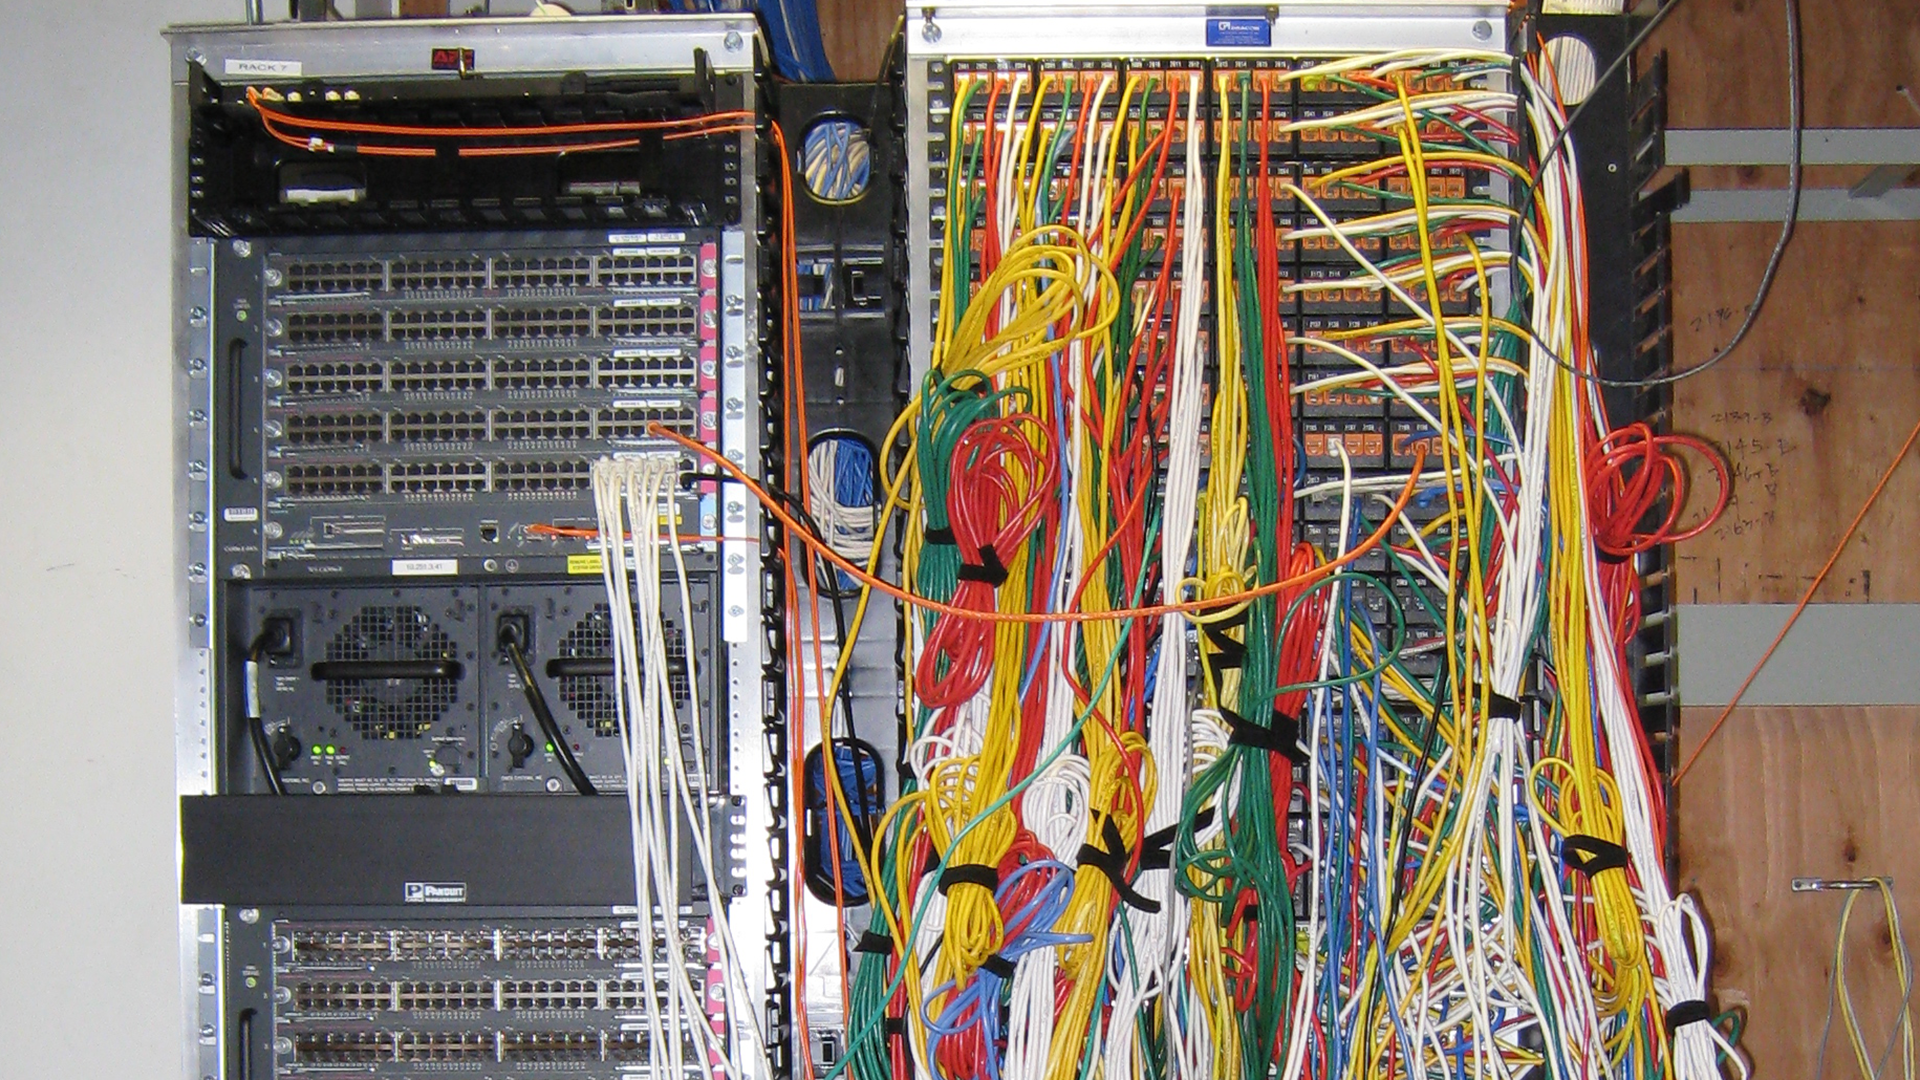 Network Rack Before